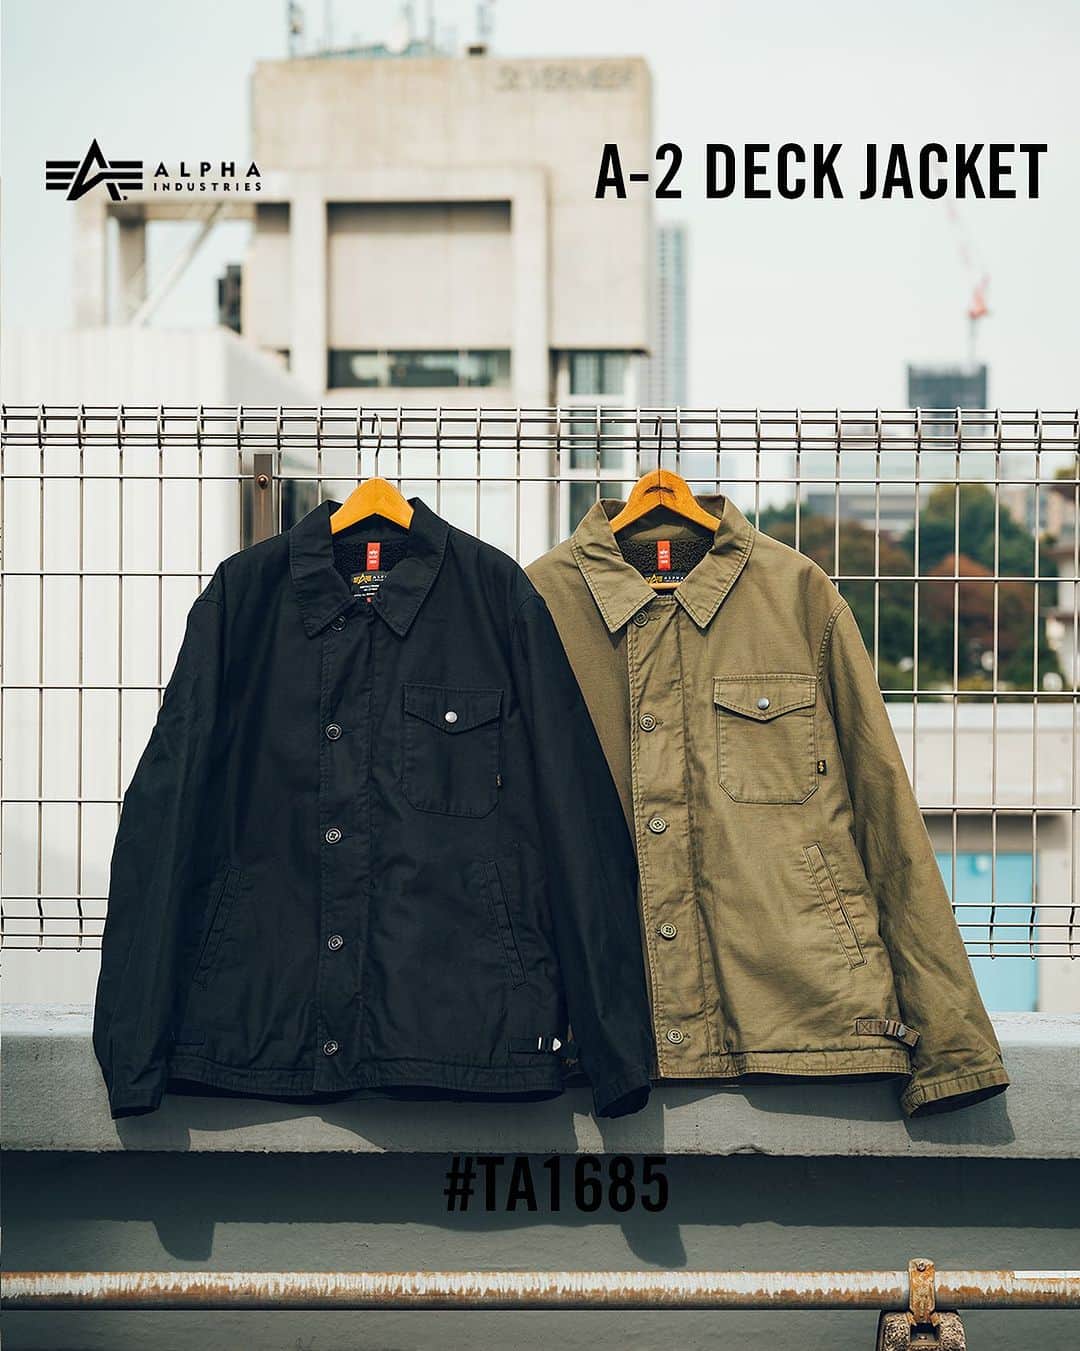 ALPHA INDUSTRIES JAPANのインスタグラム：「1960年代ベトナム戦争前期、前身のN-1デッキジャケットに変わり、アメリカ海軍の艦艇乗組員用に作られたデッキジャケット。通年で長い着用シーンを考えコットン 100% の丈夫なバックサテン素材を採用。  A-2 DECK JACKET  #TA1685 ¥29,700(in tax） Col : 001(BLACK) , 019(OLIVE)  Size :  M , L , XL    #alpha_industries_japan  #alpha_industries  #ALPHAINDUSTRIES #ALPHA #ALPHASHOP #A2DeckJacket #デッキジャケット #a2deckjacket   #streetsnap #ファッションスナップ #military #fashion #outfitpost #ALPHA渋谷店 #アルファインダストリーズ #ミリタリー  #ミリタリーコーデ #ミリタリーアイテム #ストリートファッション  #アメカジ  #ジャケット #ミリタリージャケット #militaryjacket  #秋アウター #秋コーデ」